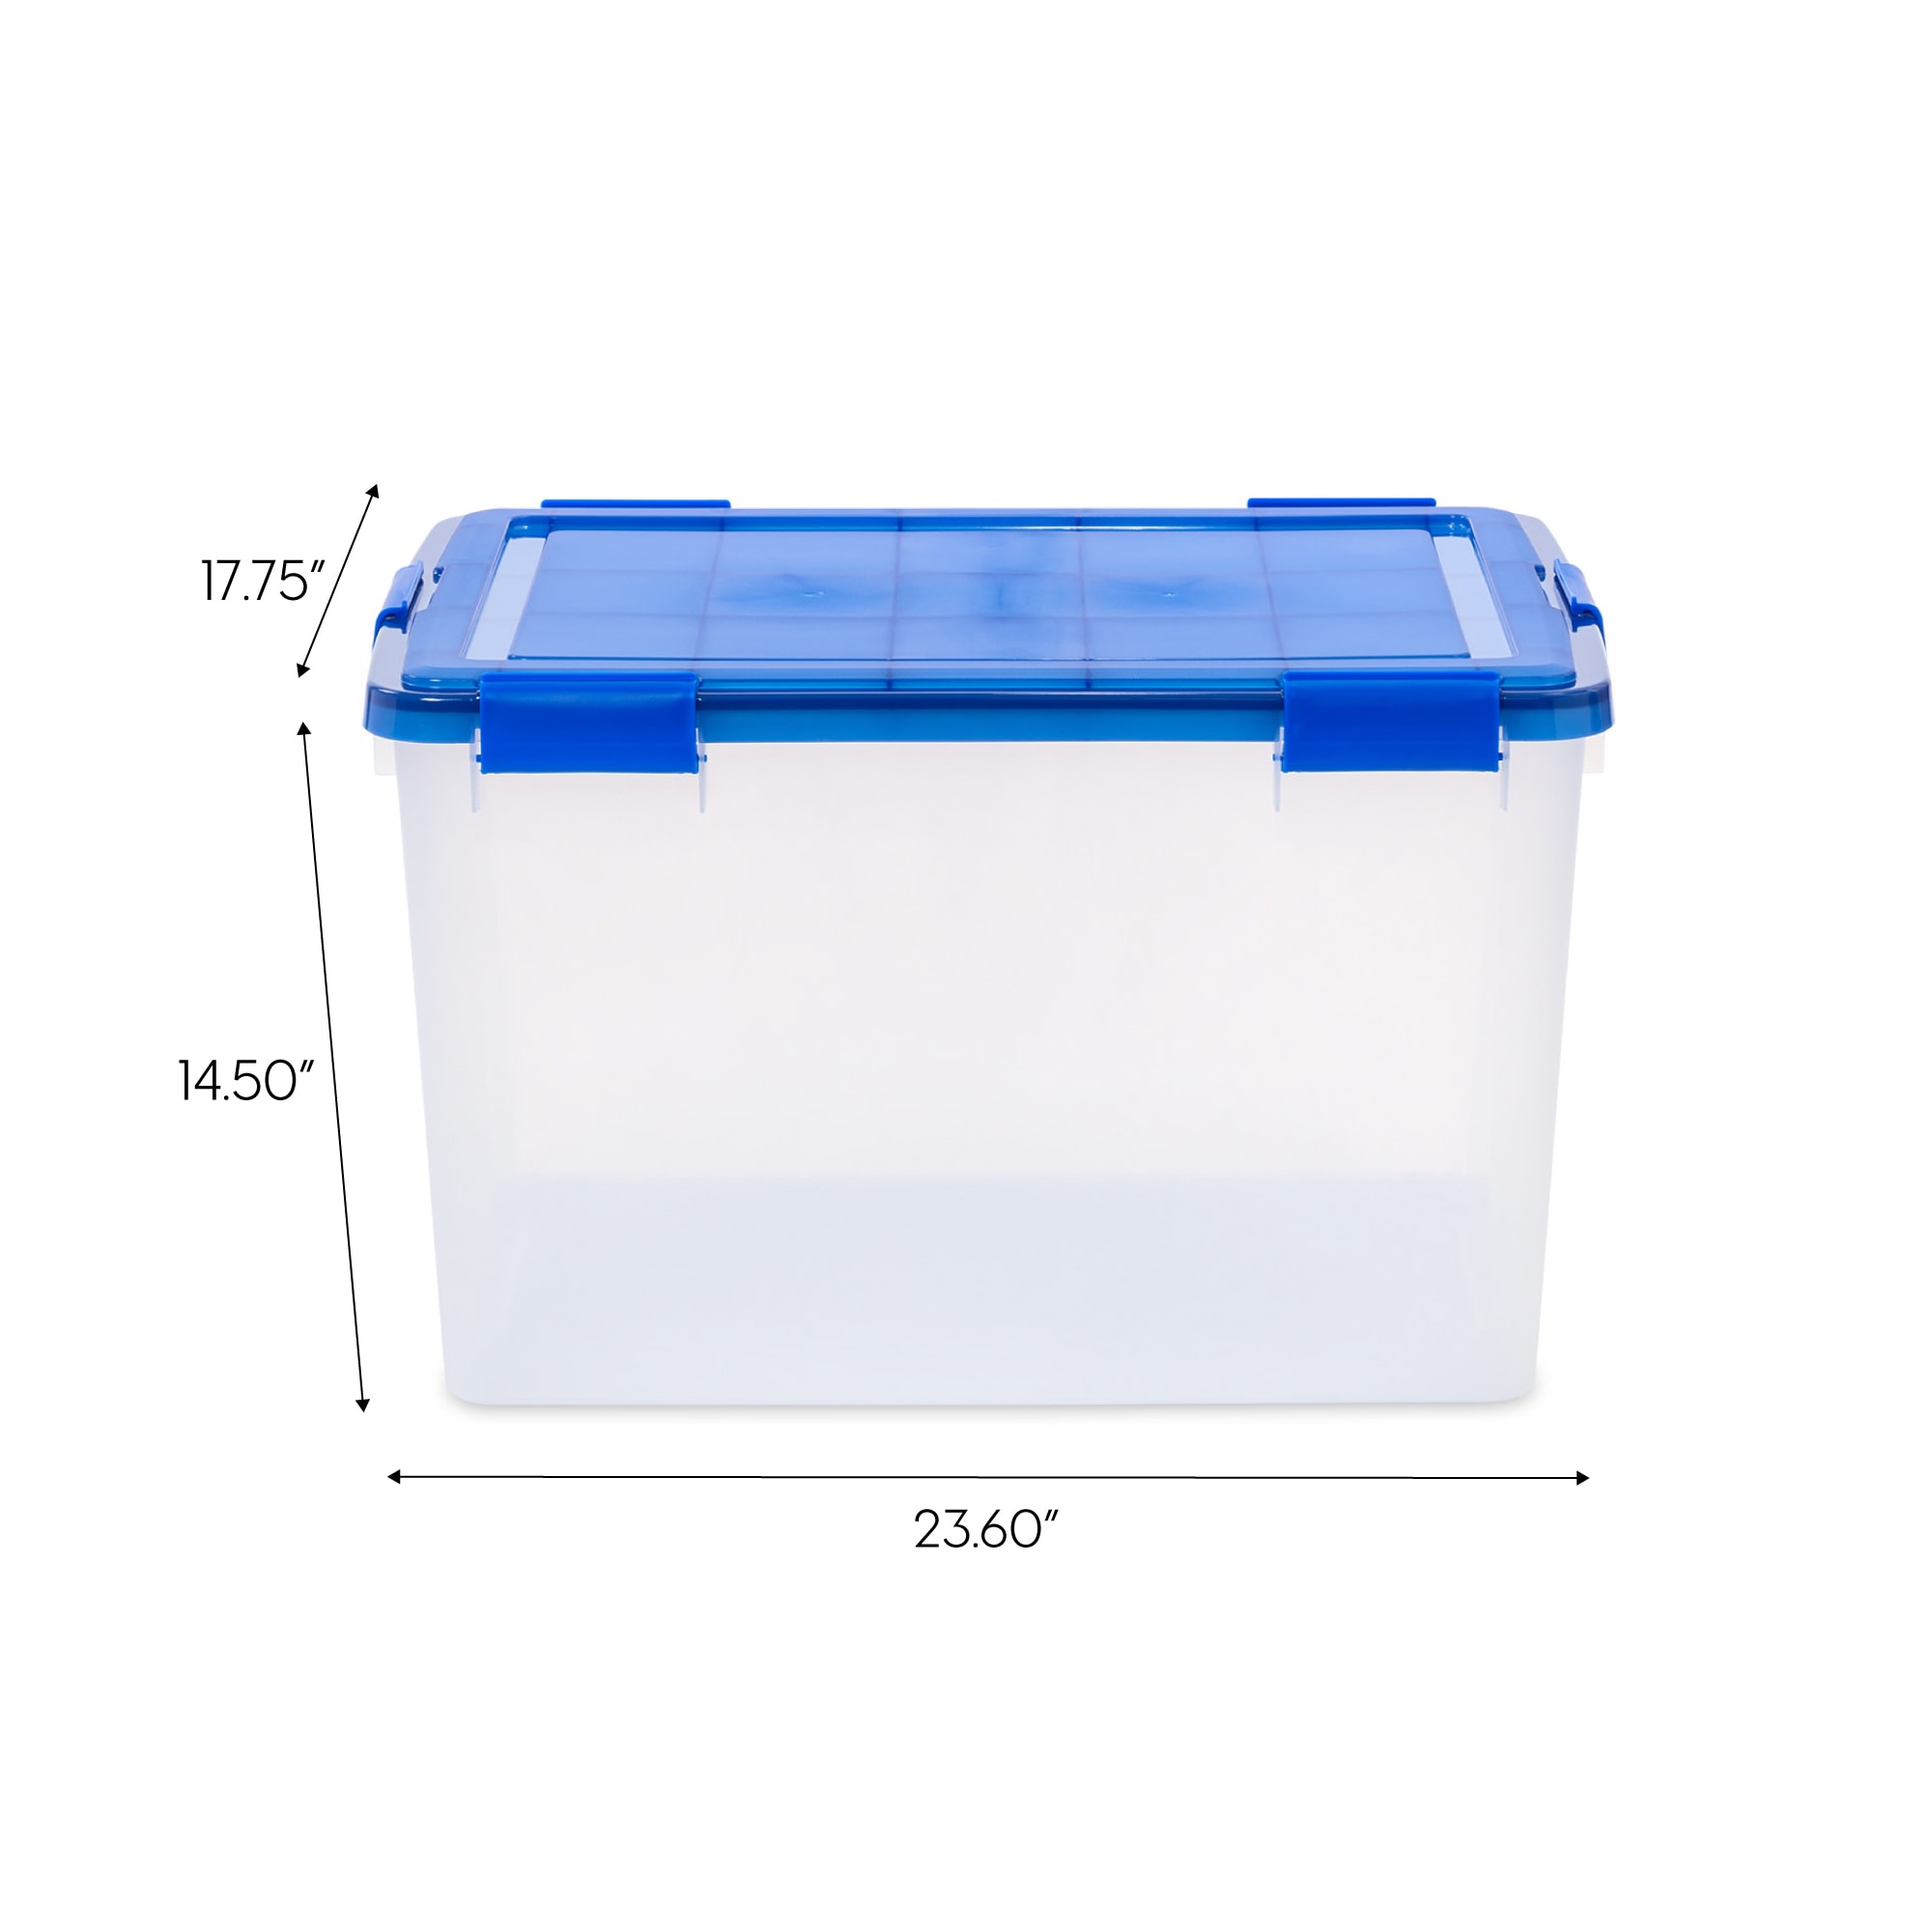 HART 18 Gallon Water Resistant Plastic Storage Bins, Black with Blue Lid